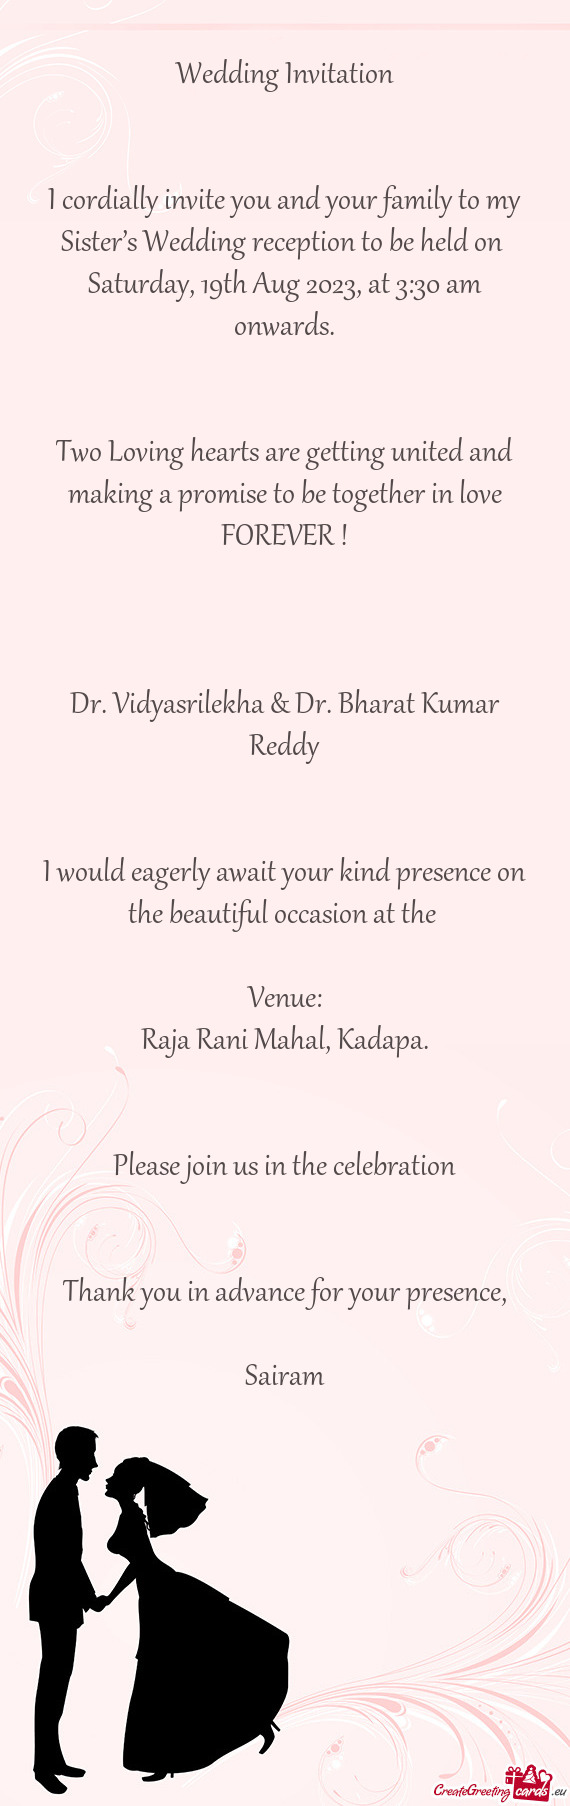 Dr. Vidyasrilekha & Dr. Bharat Kumar Reddy